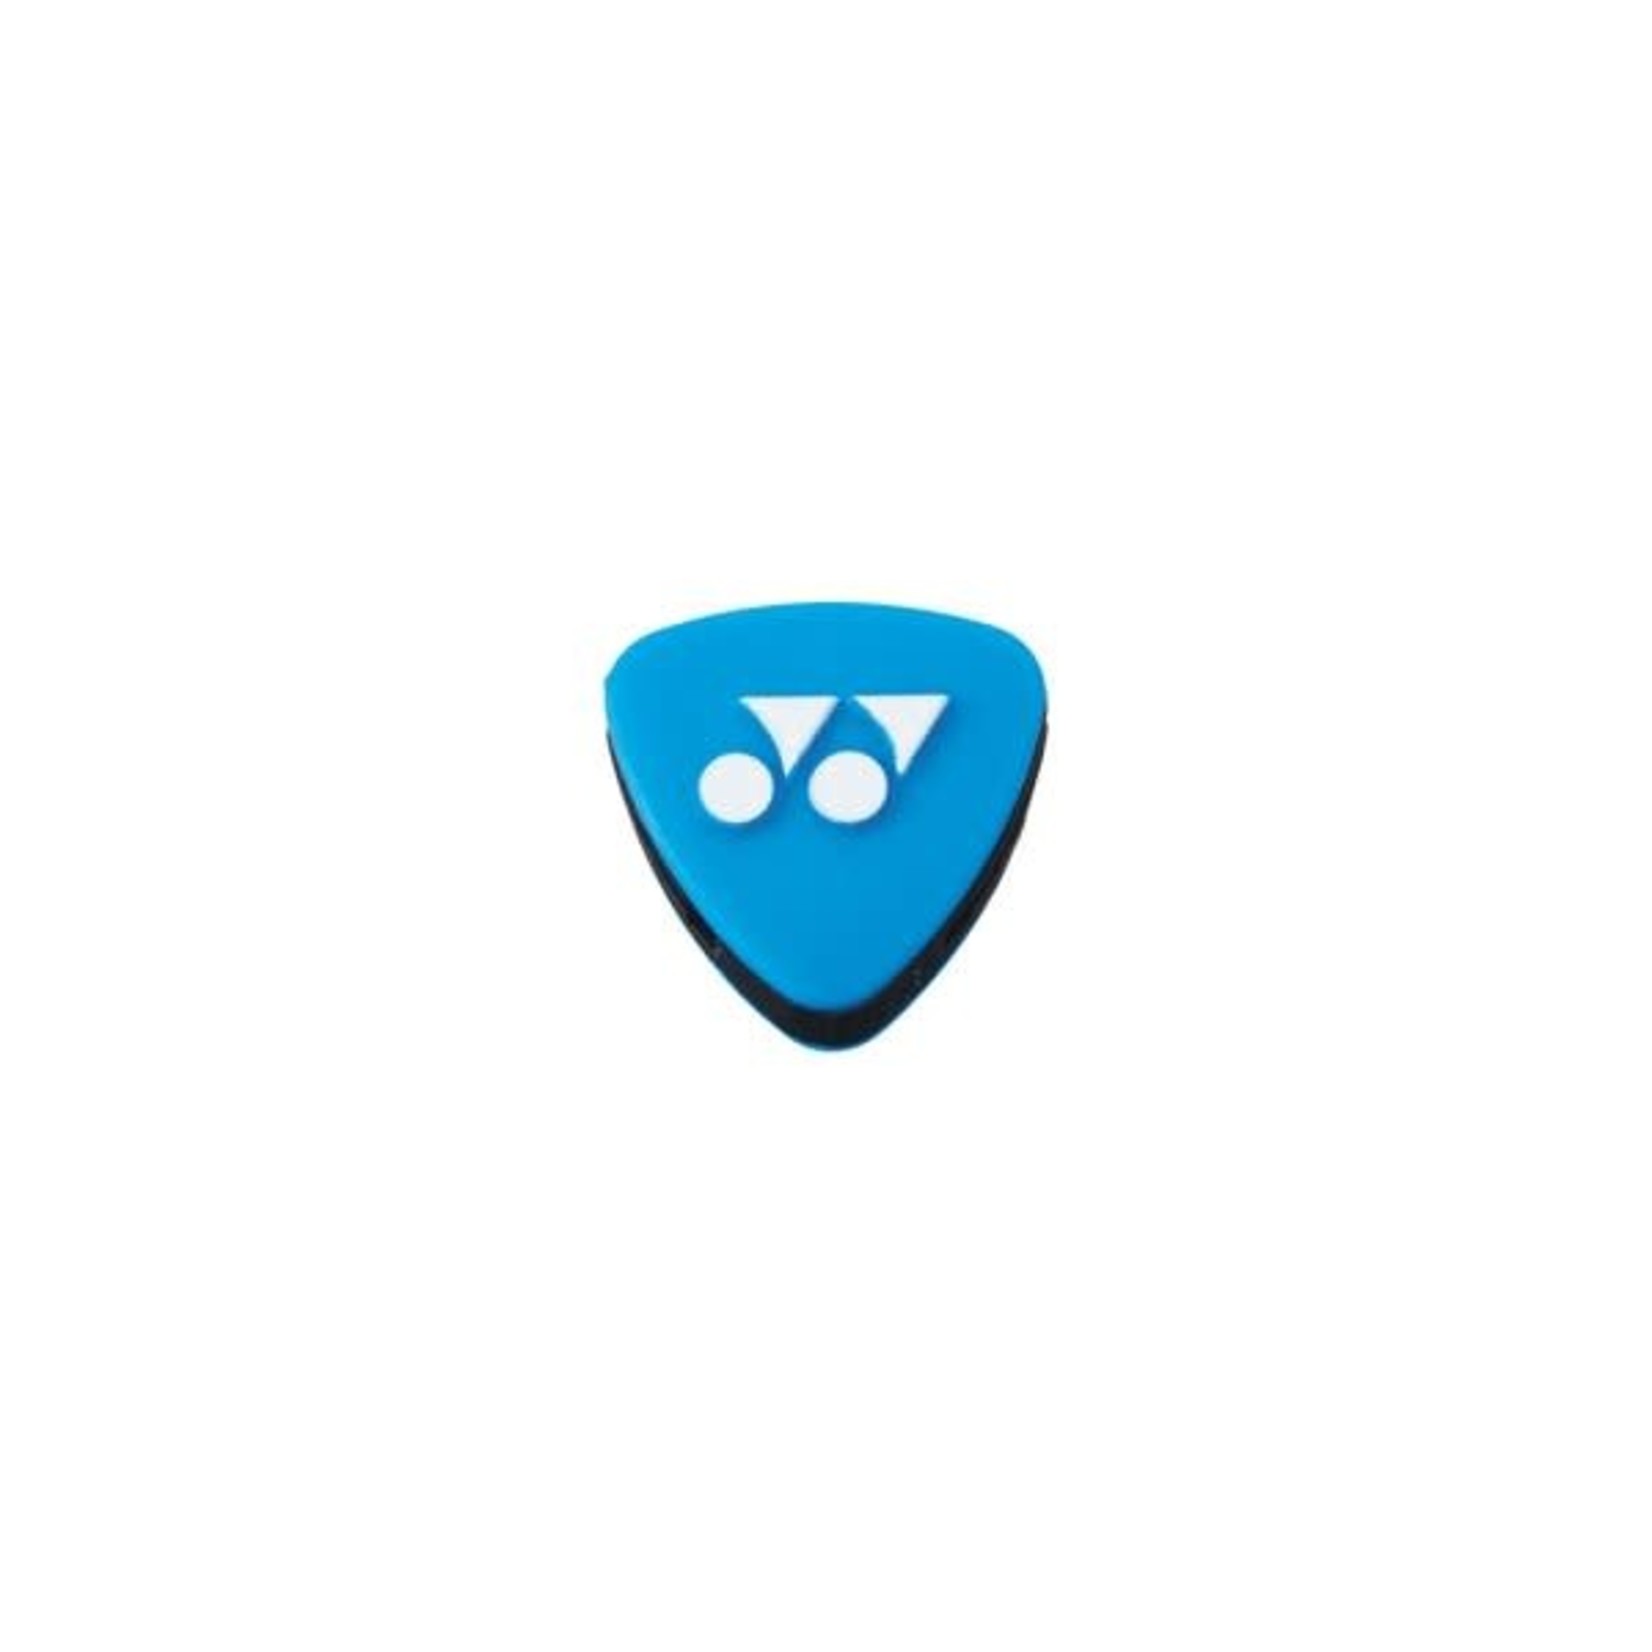 Yonex Logo Design by Abdul Momin on Dribbble